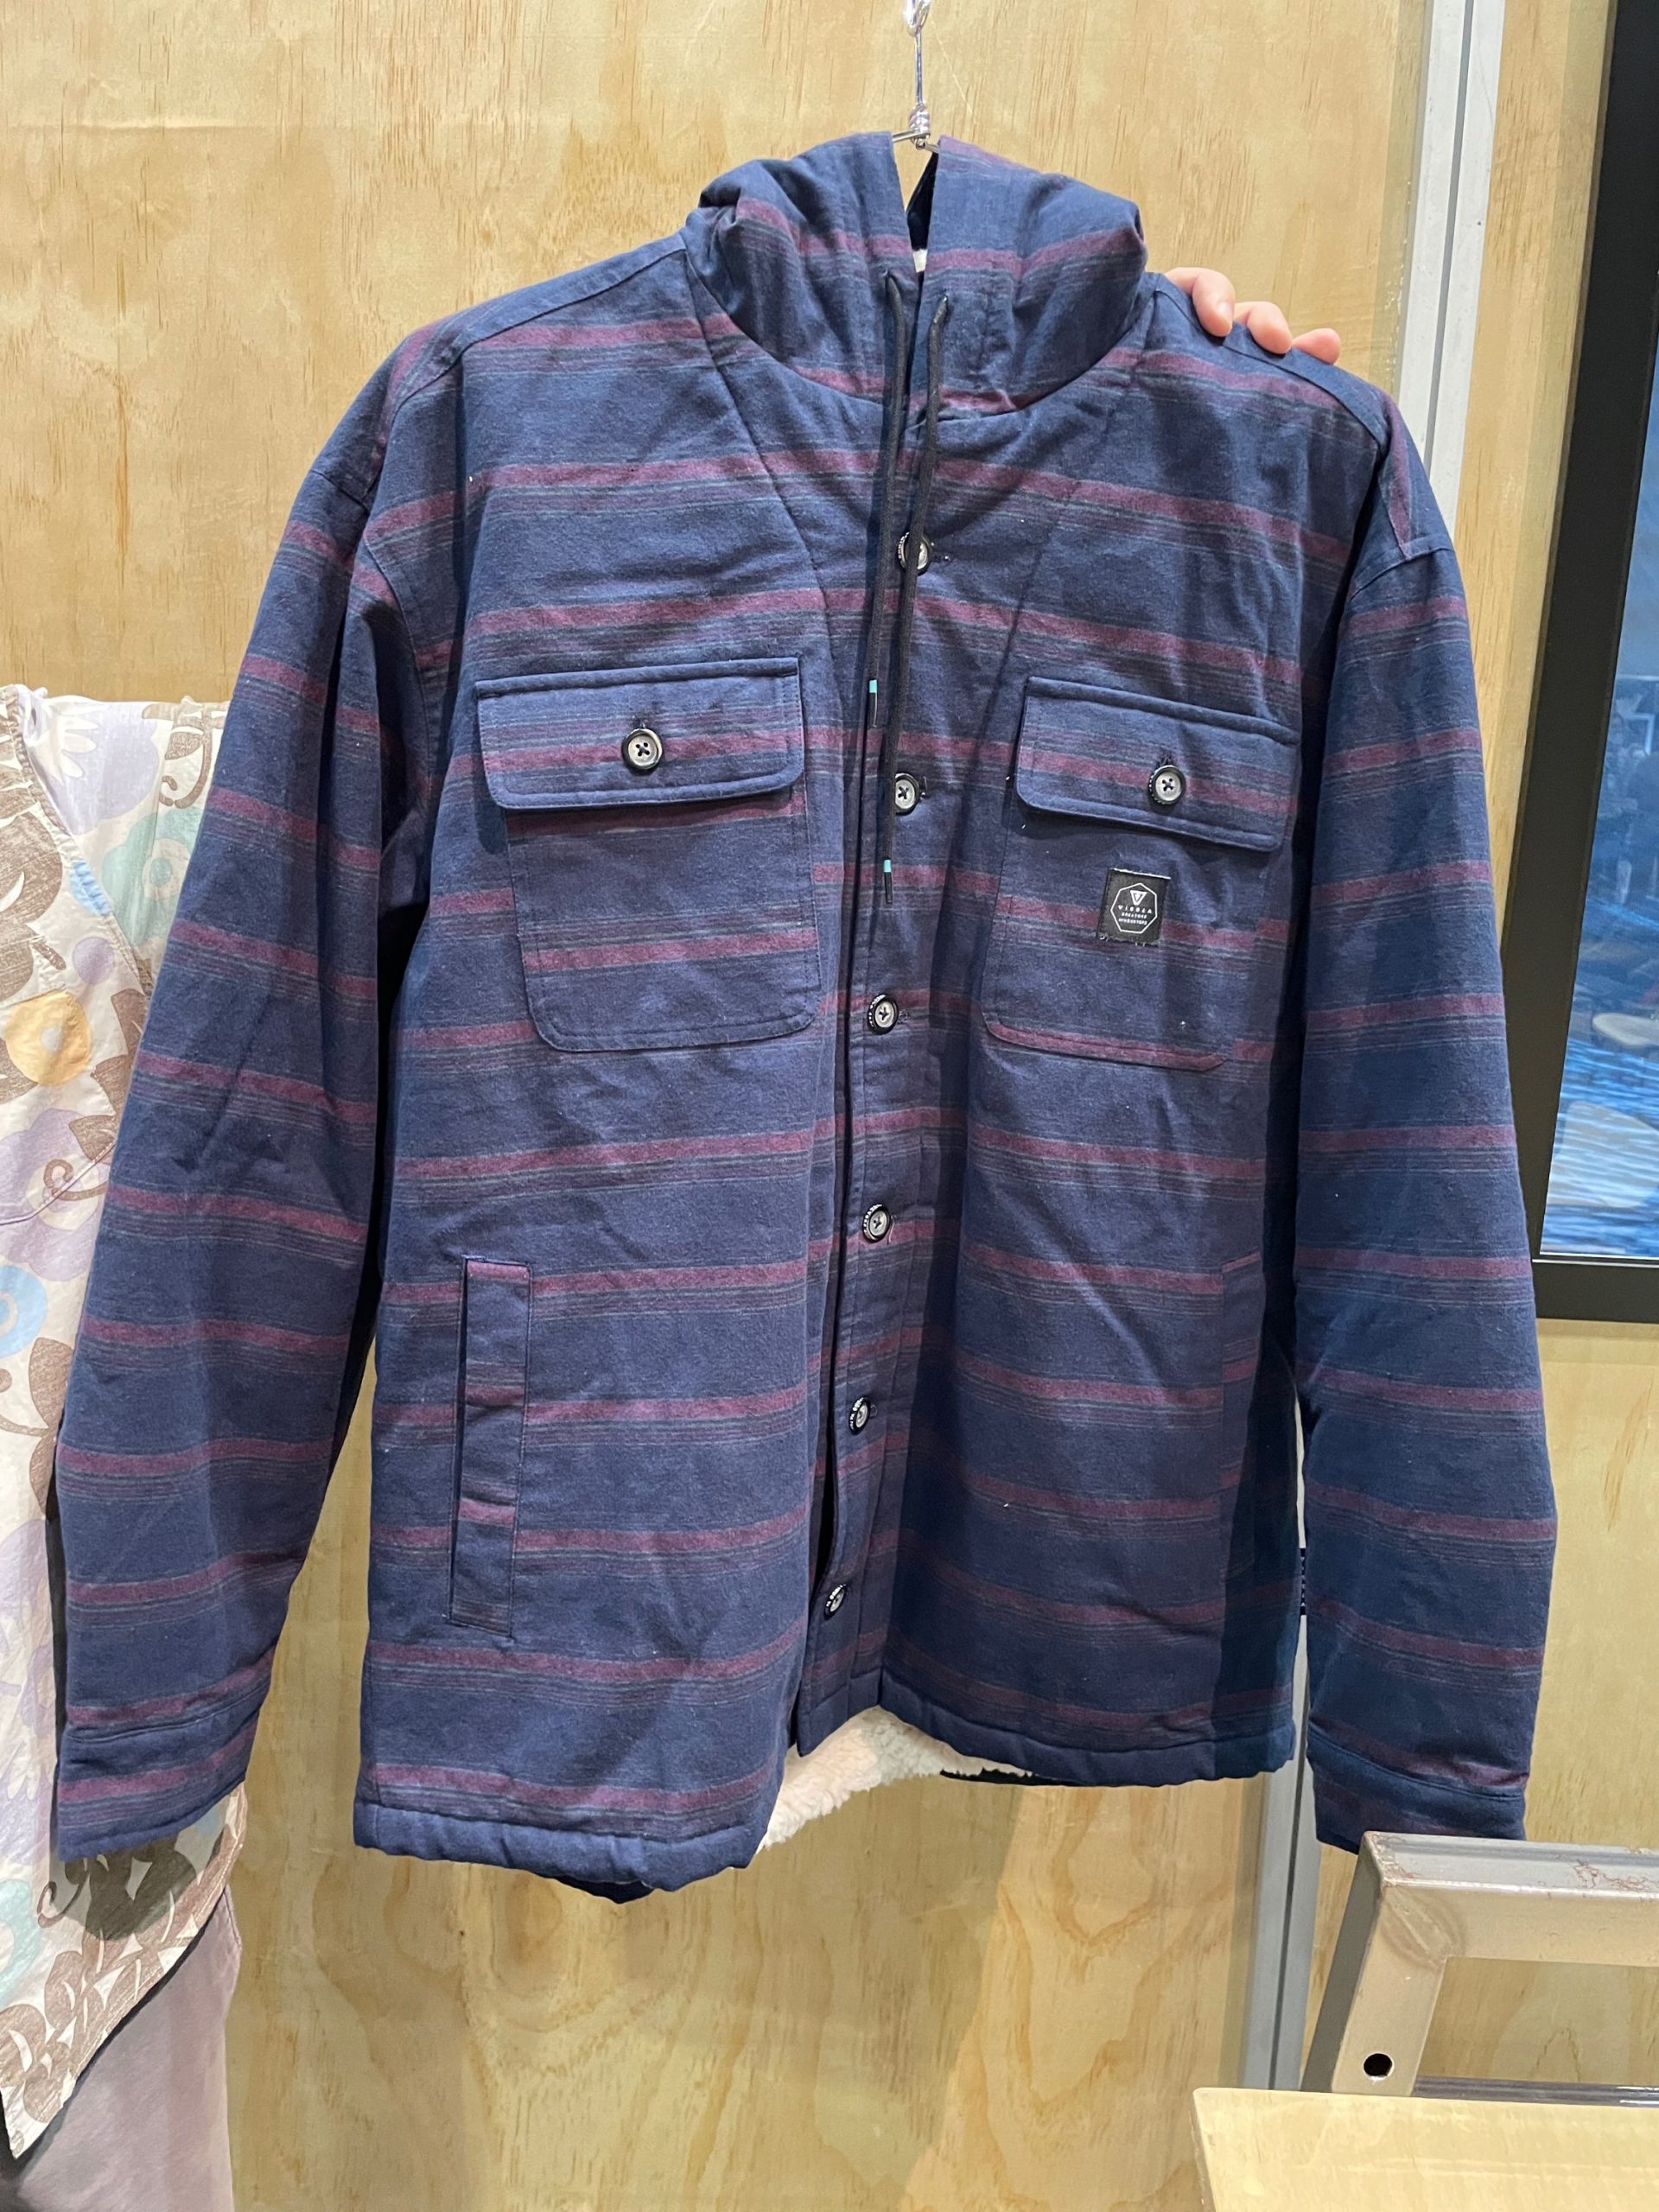 Vissla’s Button up striped sherpa lined sweatshirt jacket